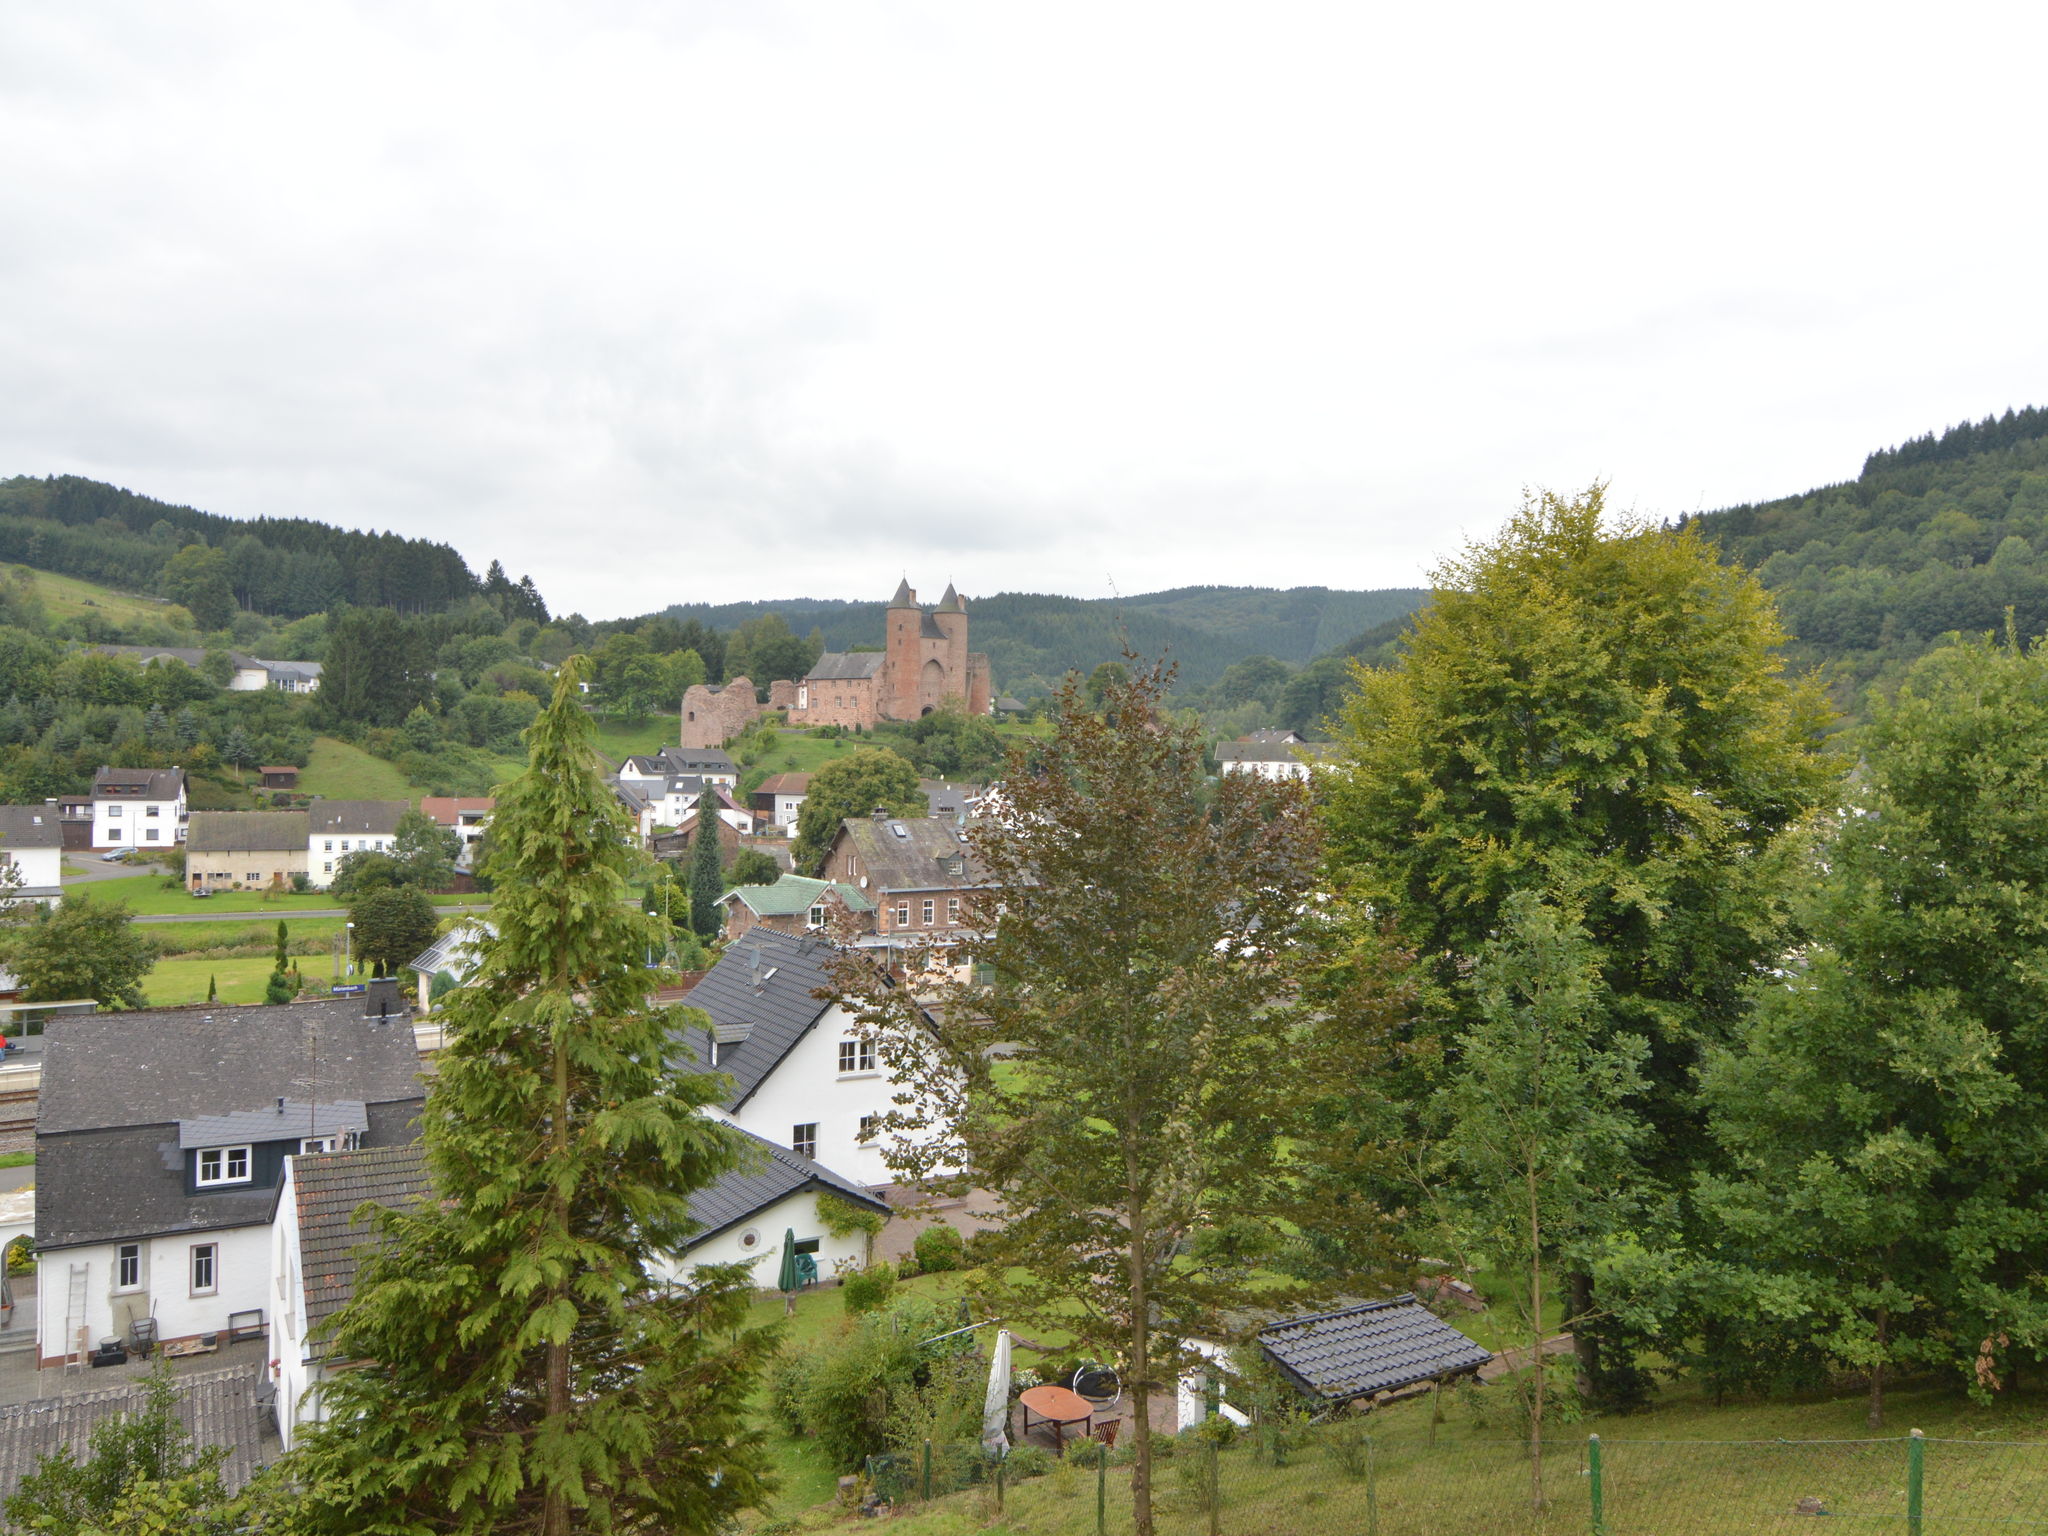   Muhrlenbach